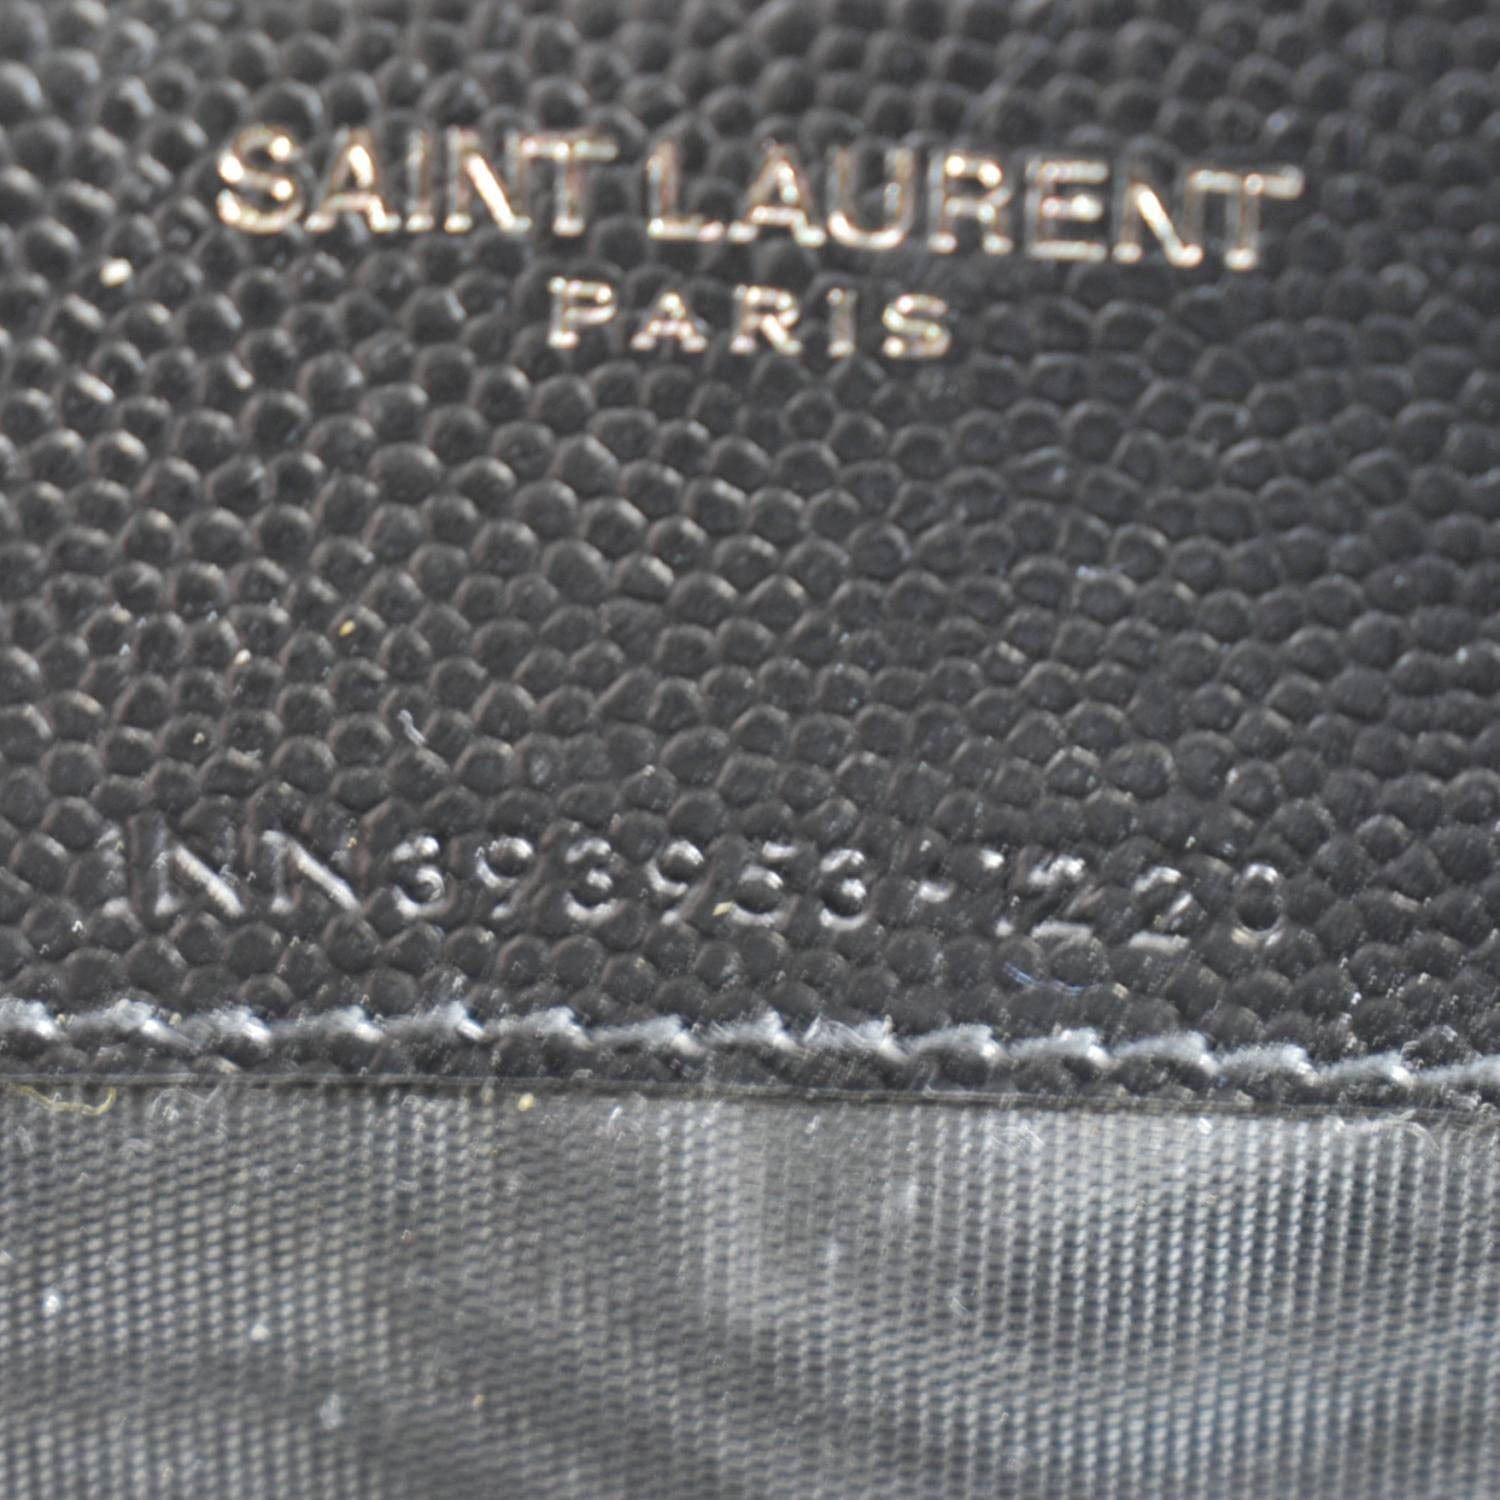 Saint Laurent Envelope Chain Crossbody Bag - Farfetch